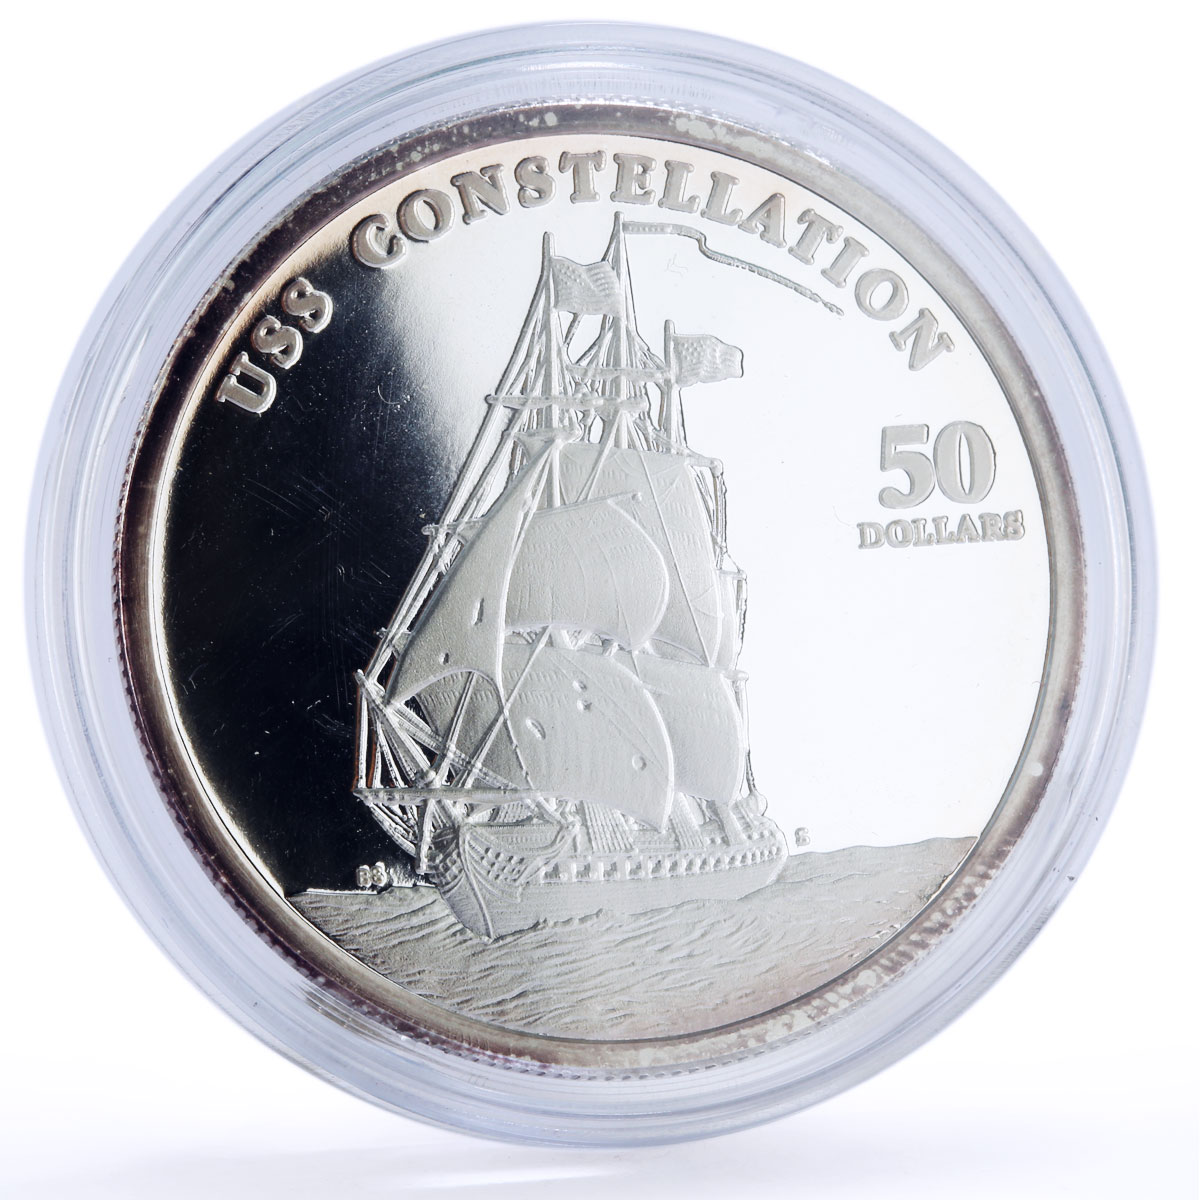 Marshall Islands 50 dollars Seafaring USS Constellation Ship silver coin 1998